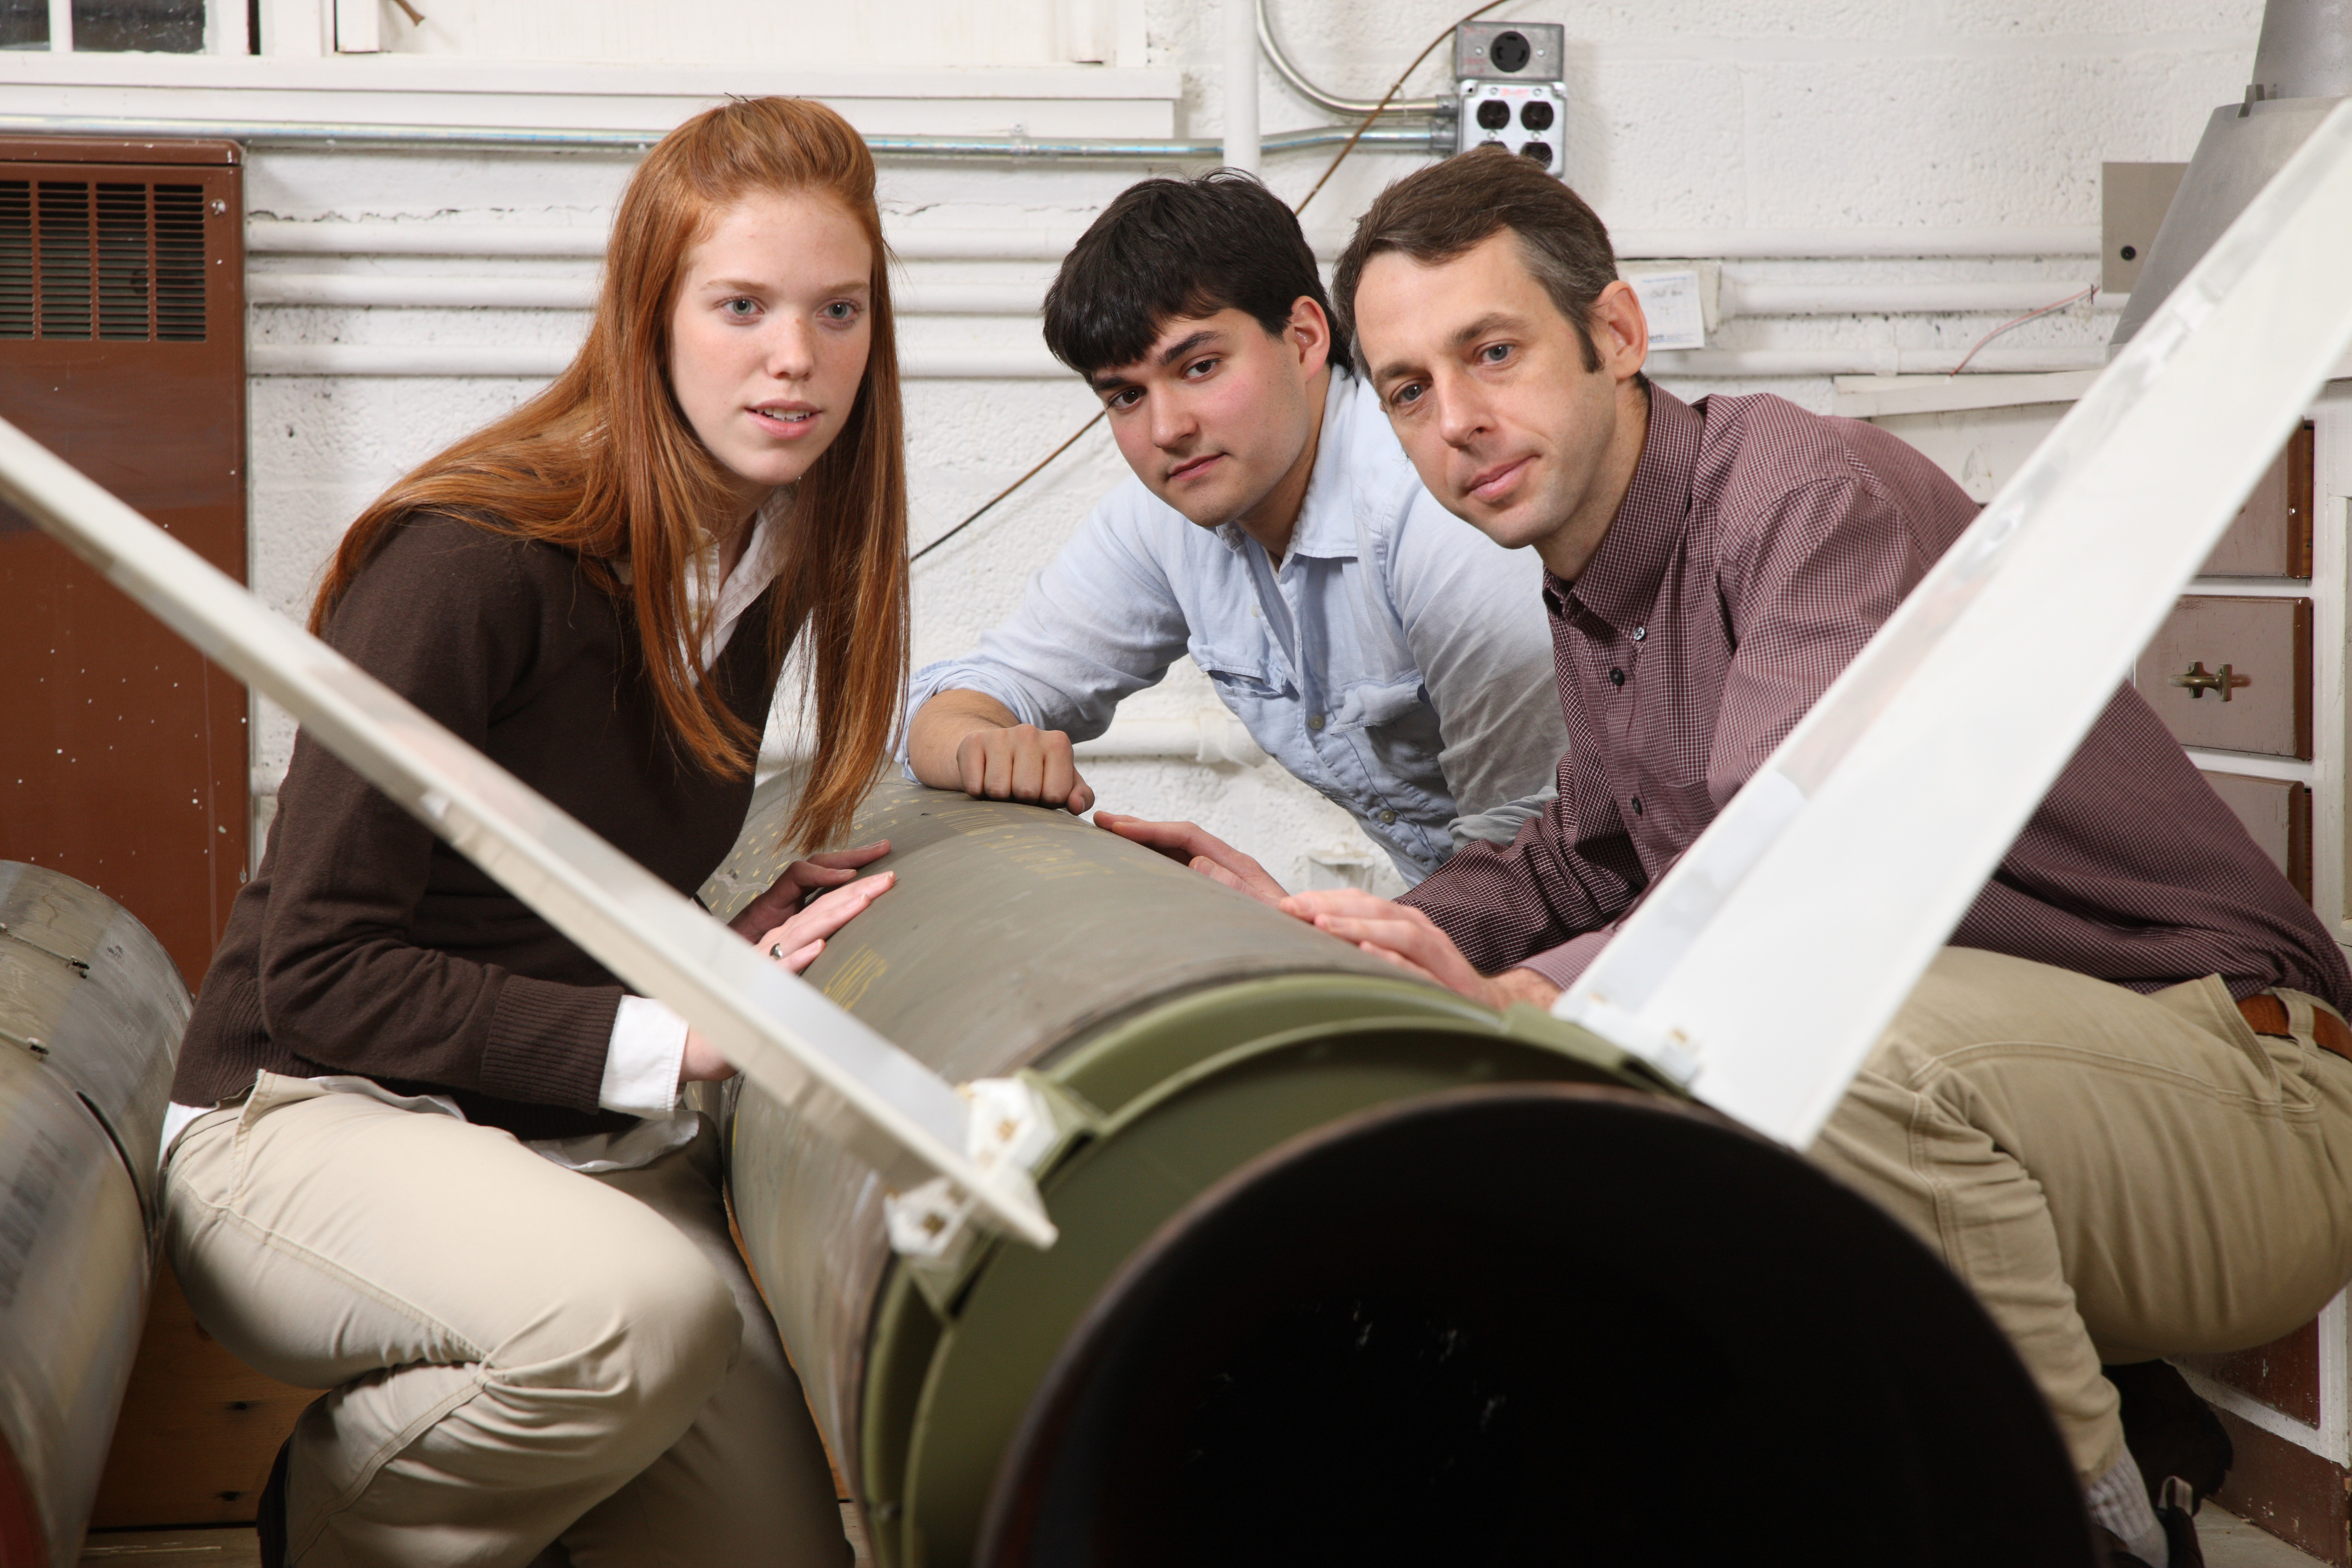 Elizabeth Martin Ryan Johnson, and Assistant Professor Christopher Goyne inspect a rocket